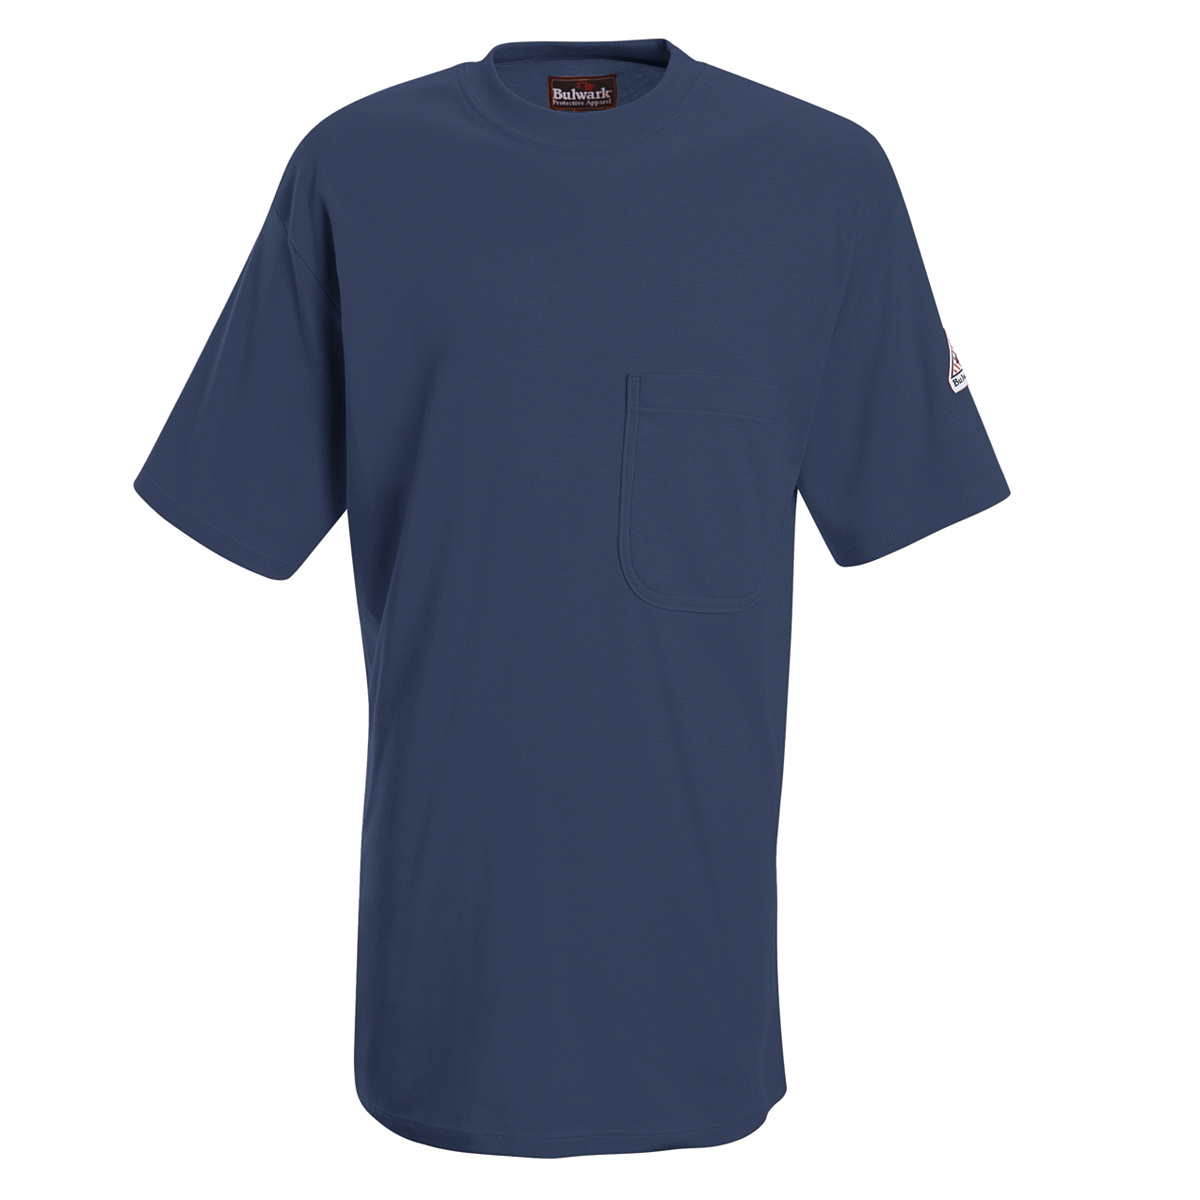 Bulwark® Small Regular Navy Blue EXCEL FR® Interlock FR Cotton Flame Resistant Shirt